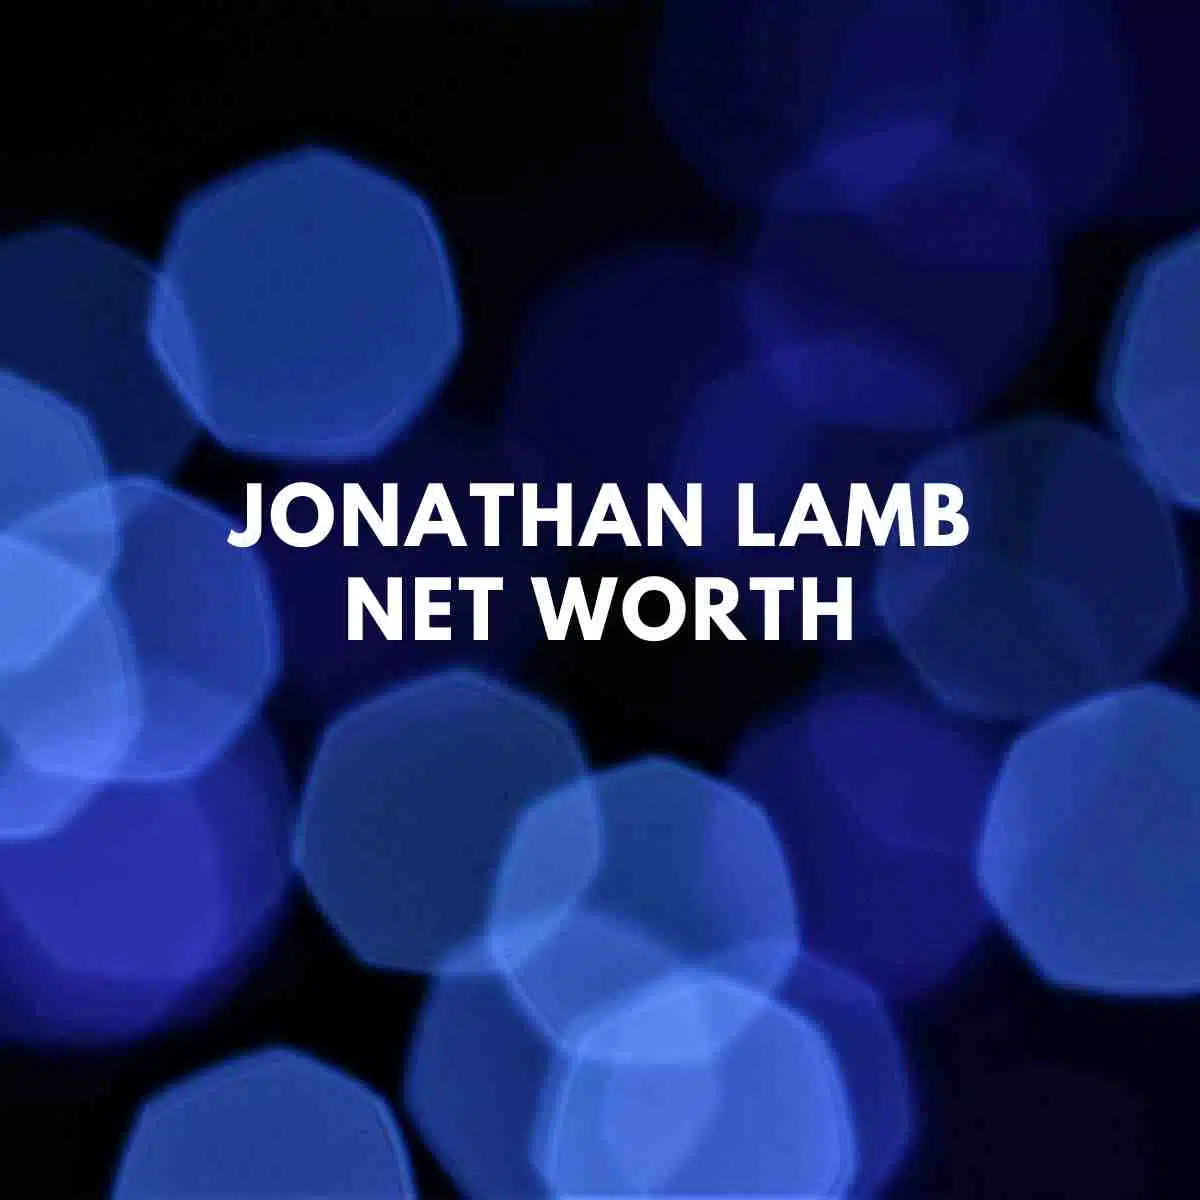 Jonathan Lamb net worth